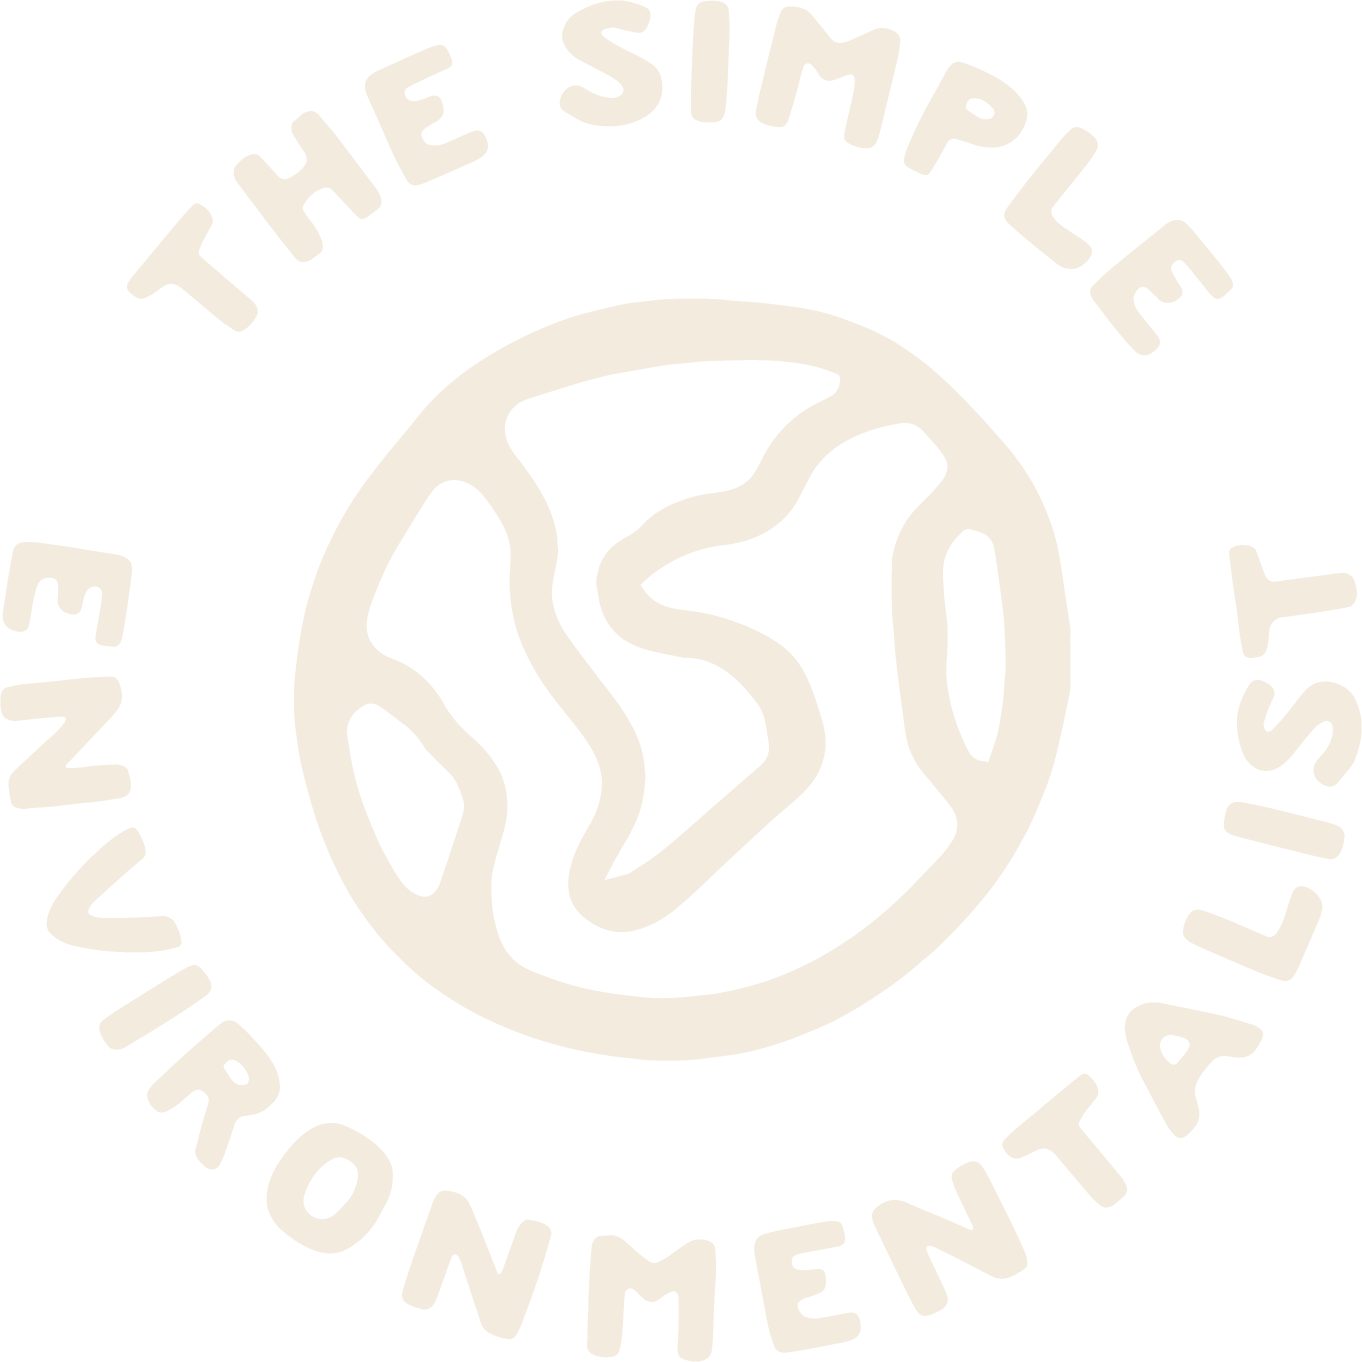 The Simple Environmentalist